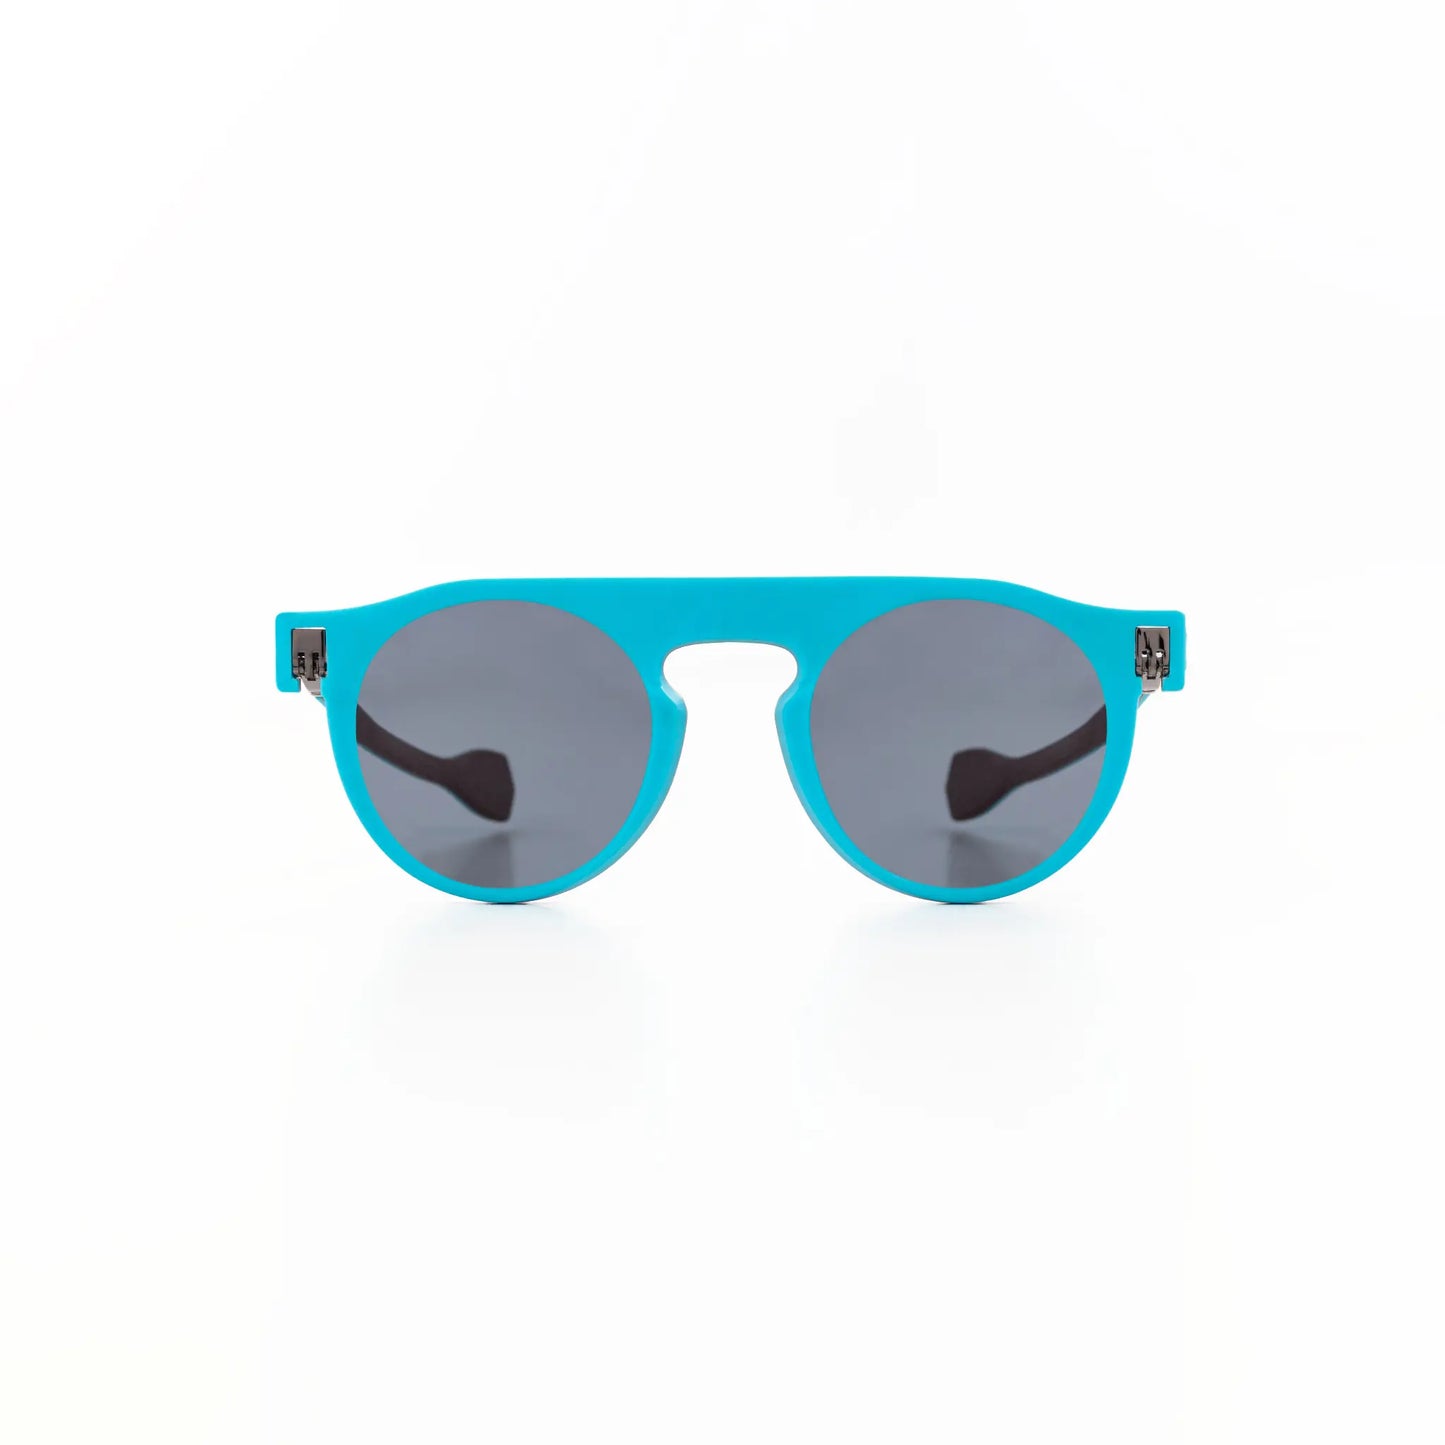 Reverso sunglasses brown & light blue reversible & ultra light front view 2